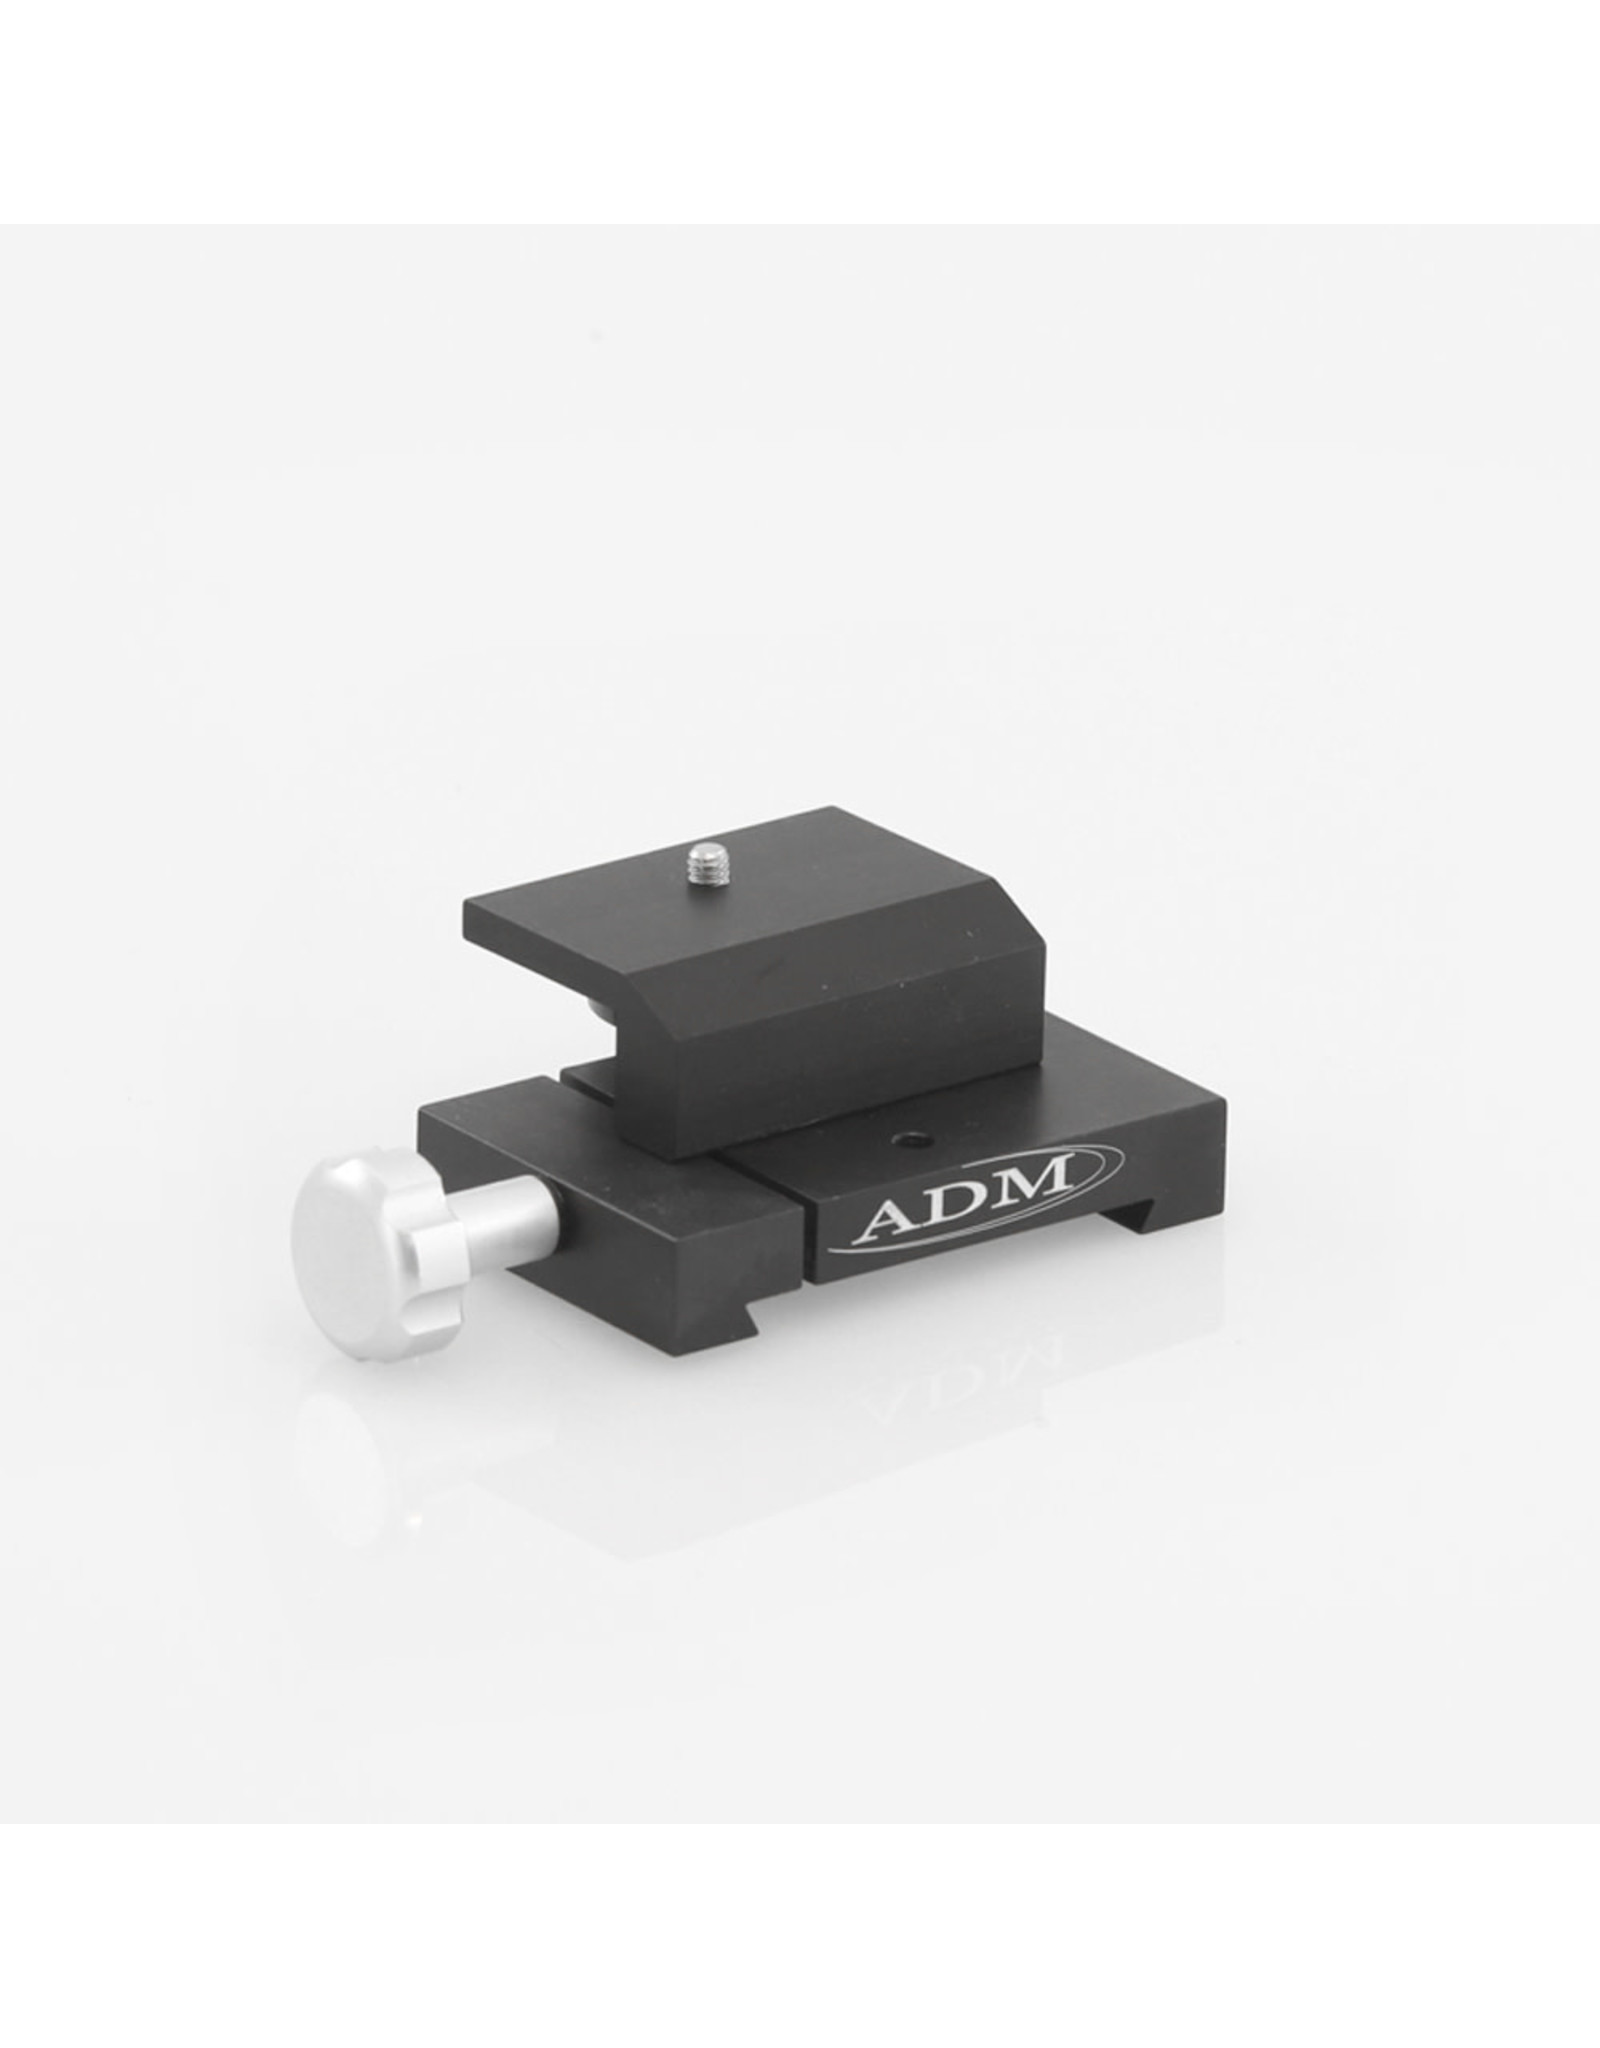 ADM ADM D Series Camera Mount